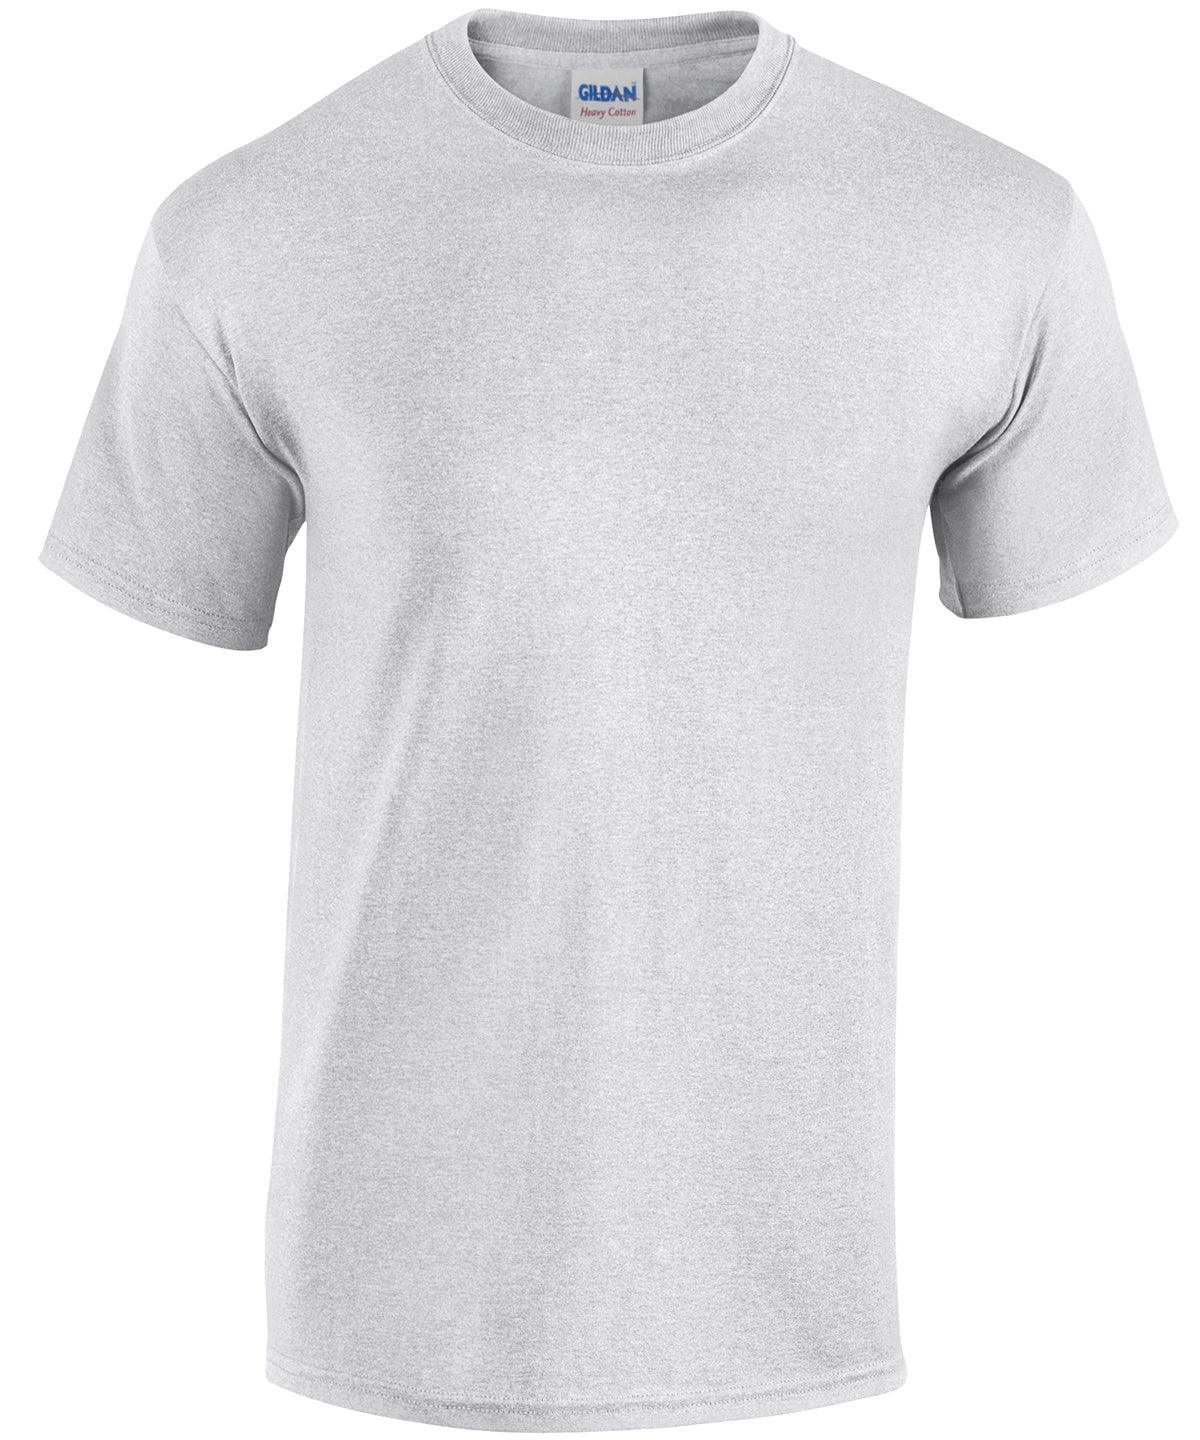 Personalised T-Shirts - Mid Orange Gildan Heavy Cotton™ adult t-shirt